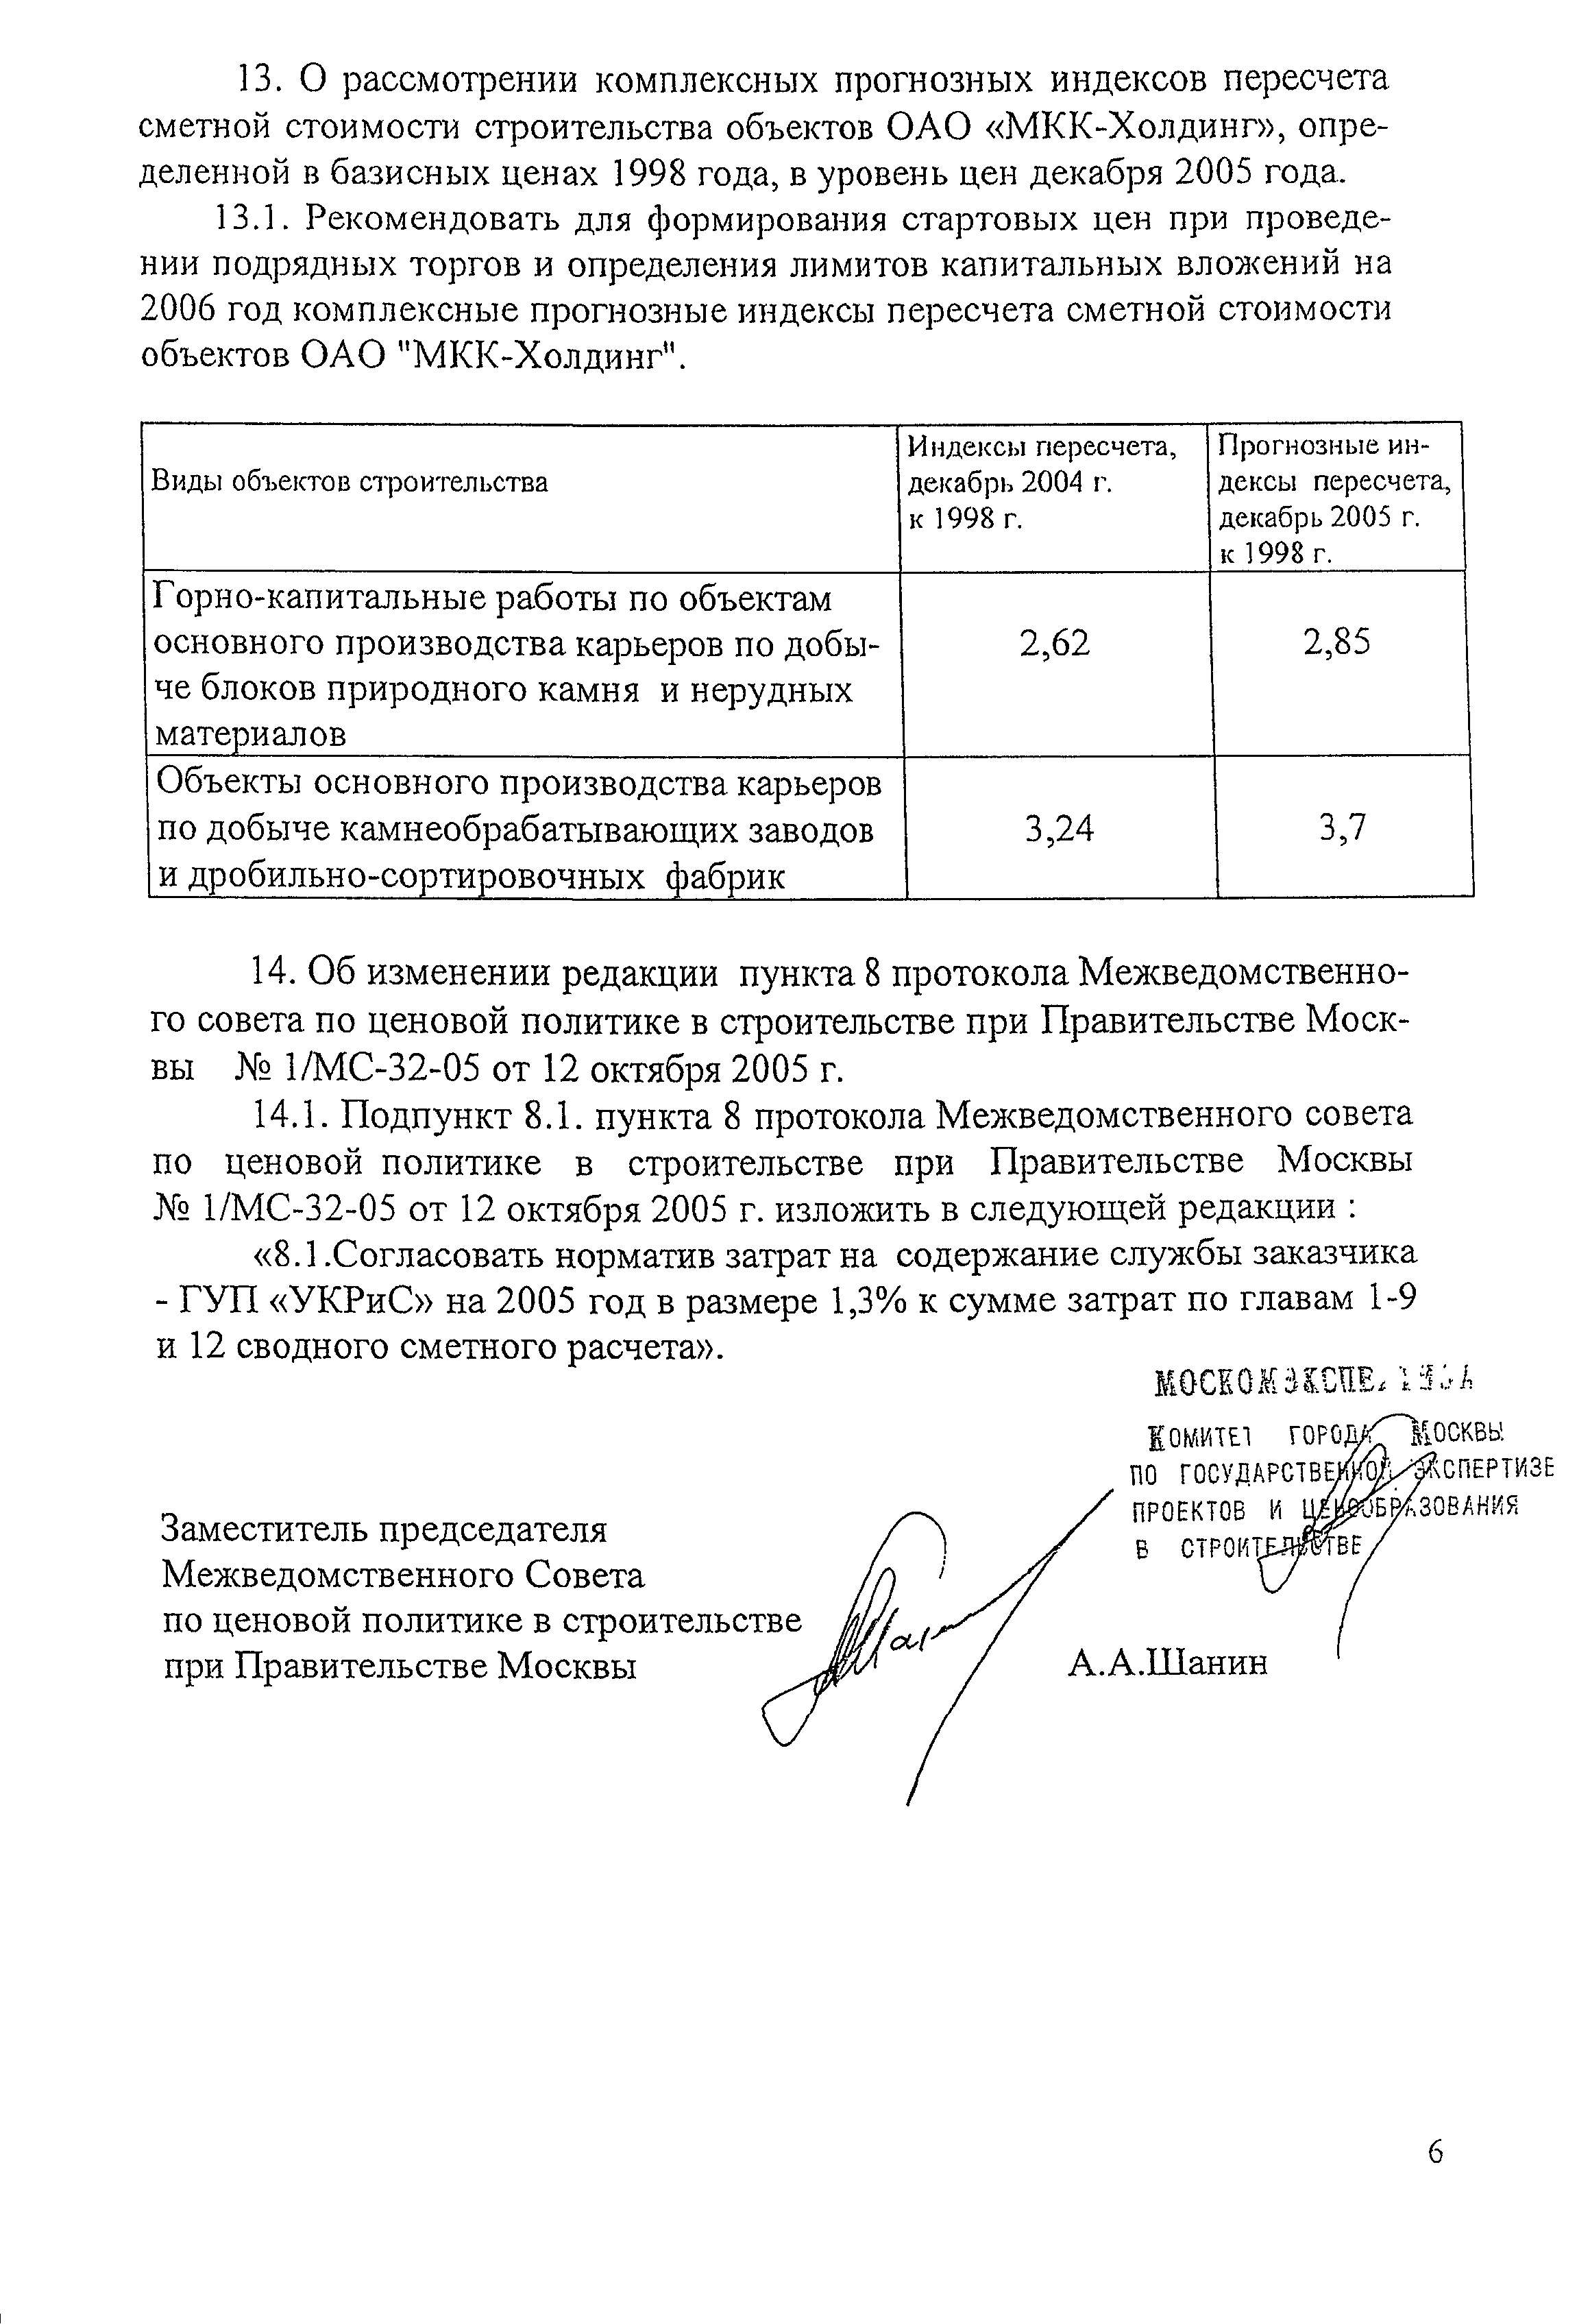 Протокол 1/МС-36-05